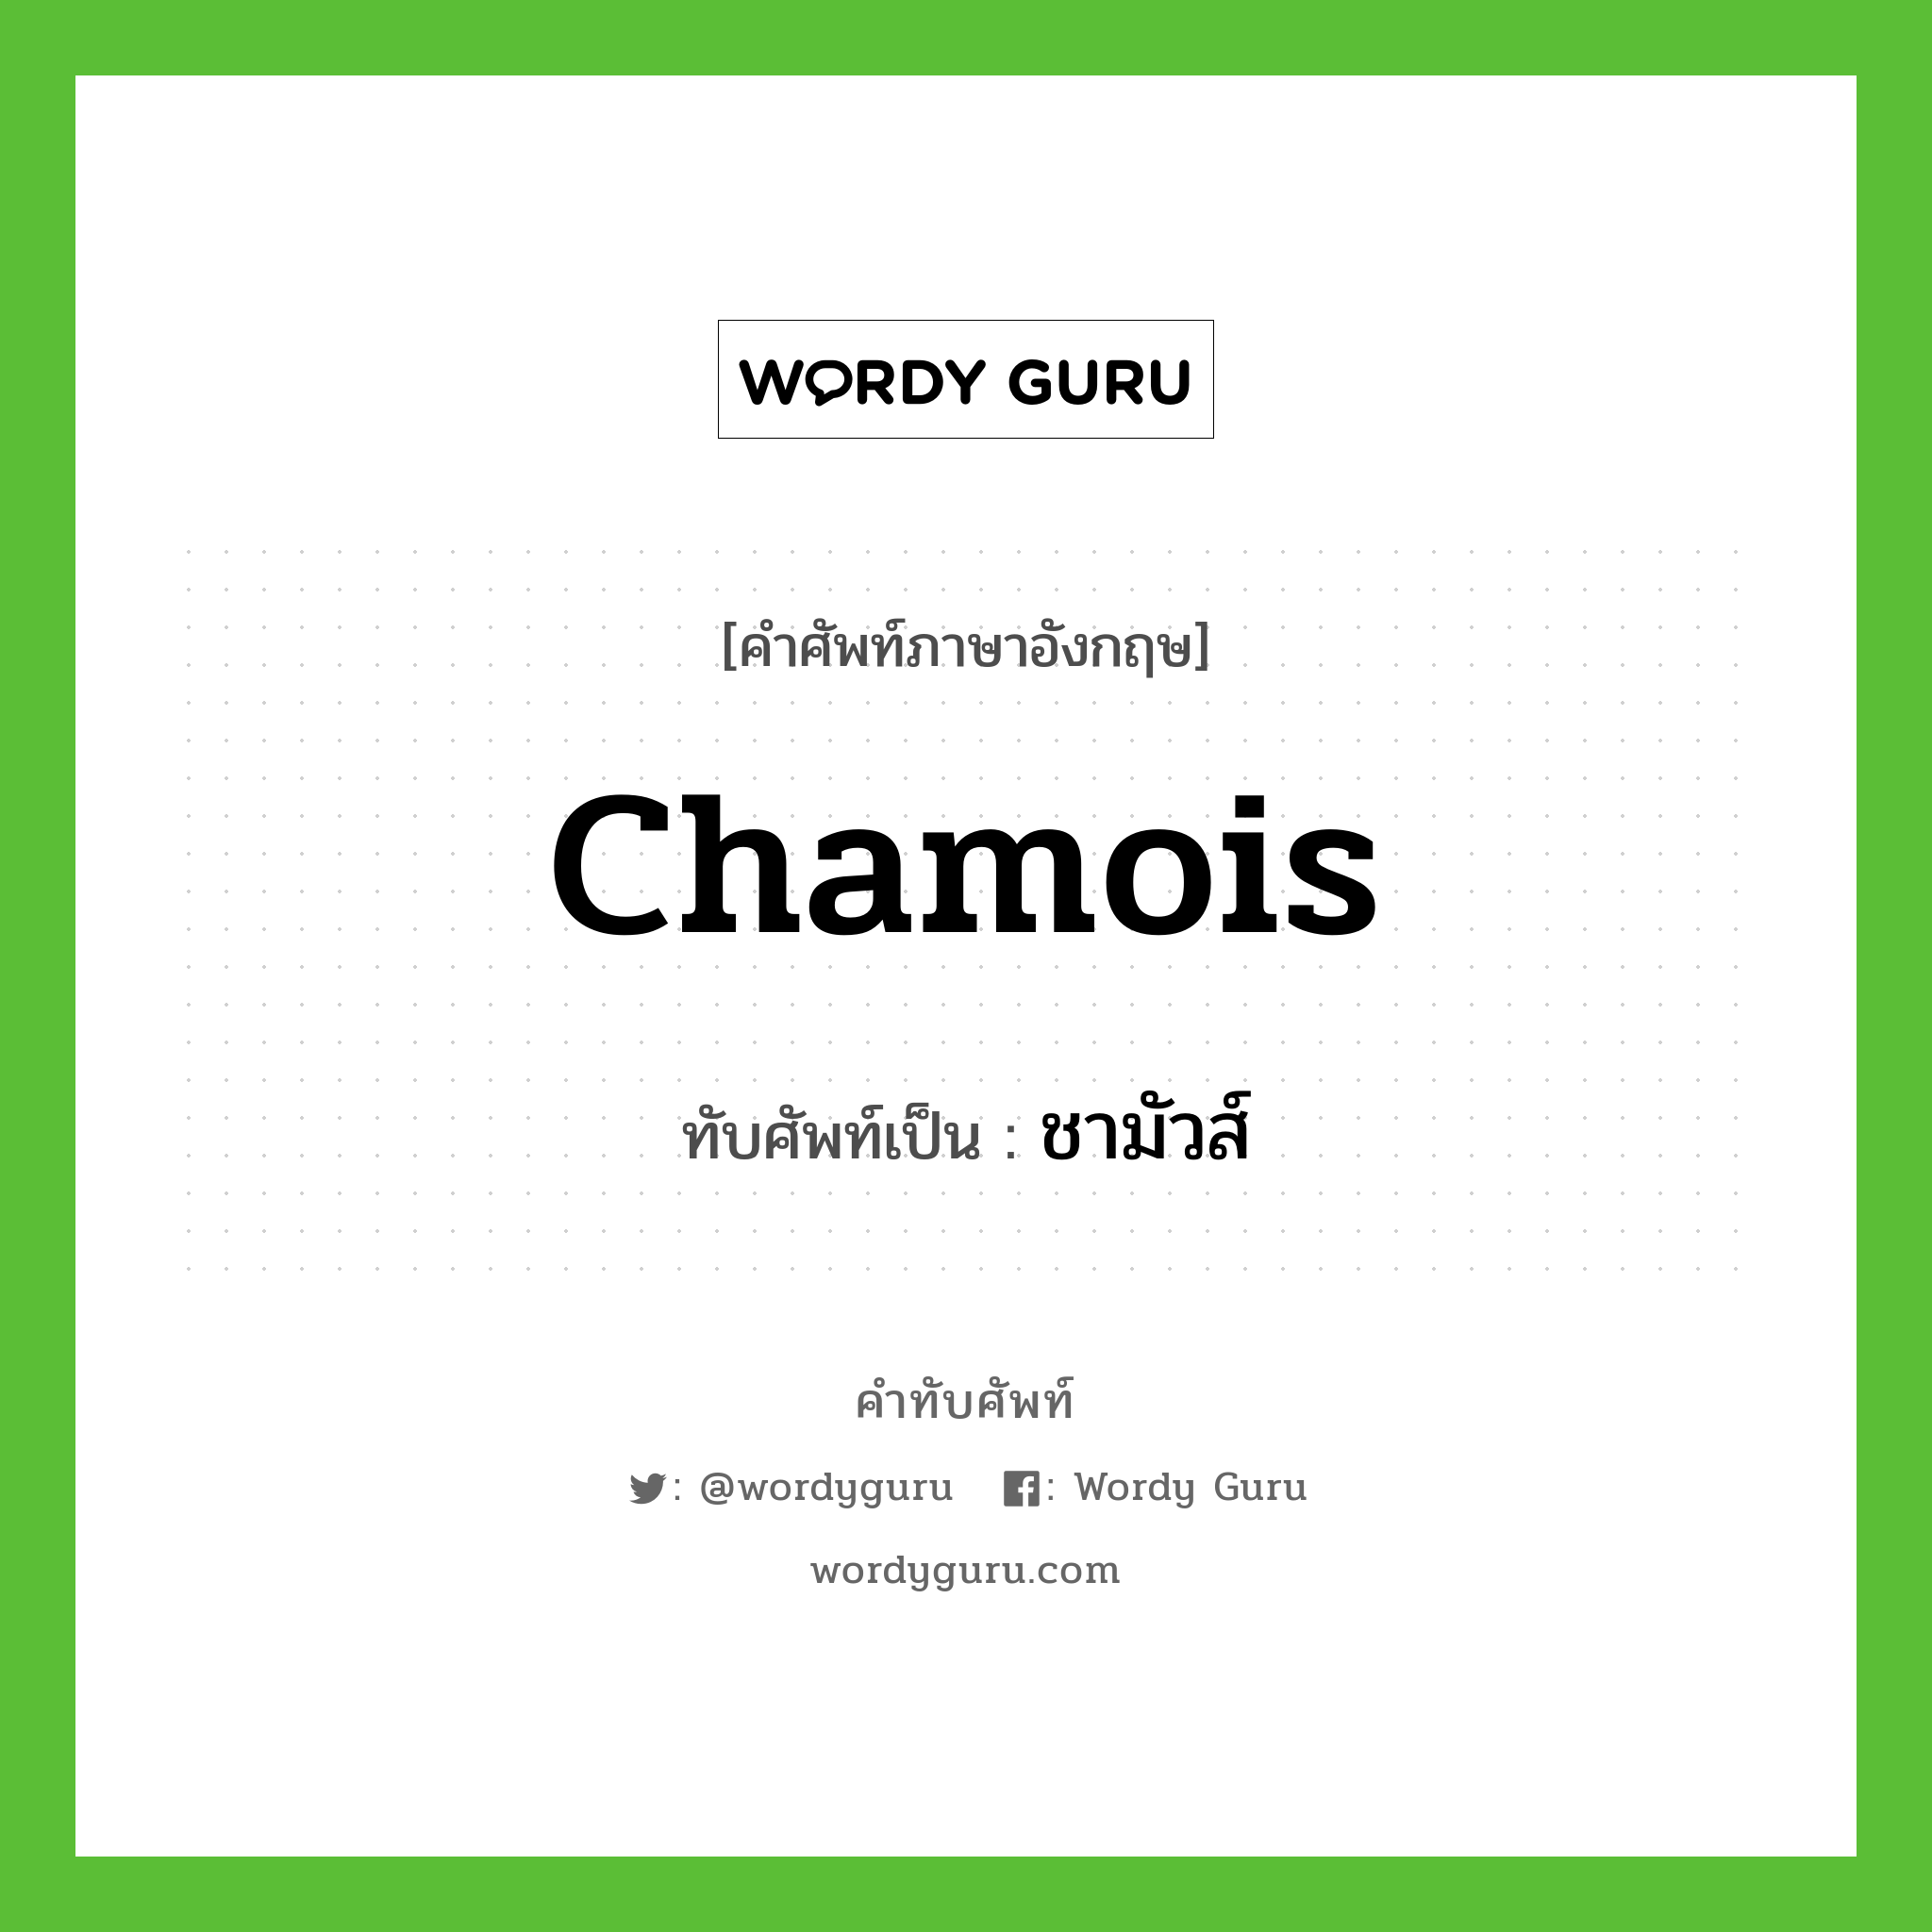 chamois เขียนเป็นคำไทยว่าอะไร?, คำศัพท์ภาษาอังกฤษ chamois ทับศัพท์เป็น ชามัวส์